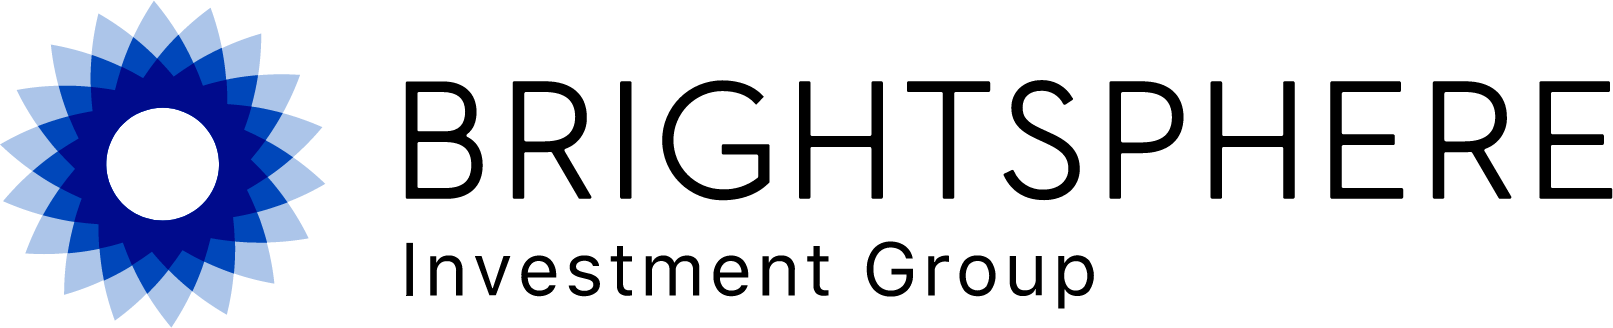 BrightSphere Investment Group logo large (transparent PNG)